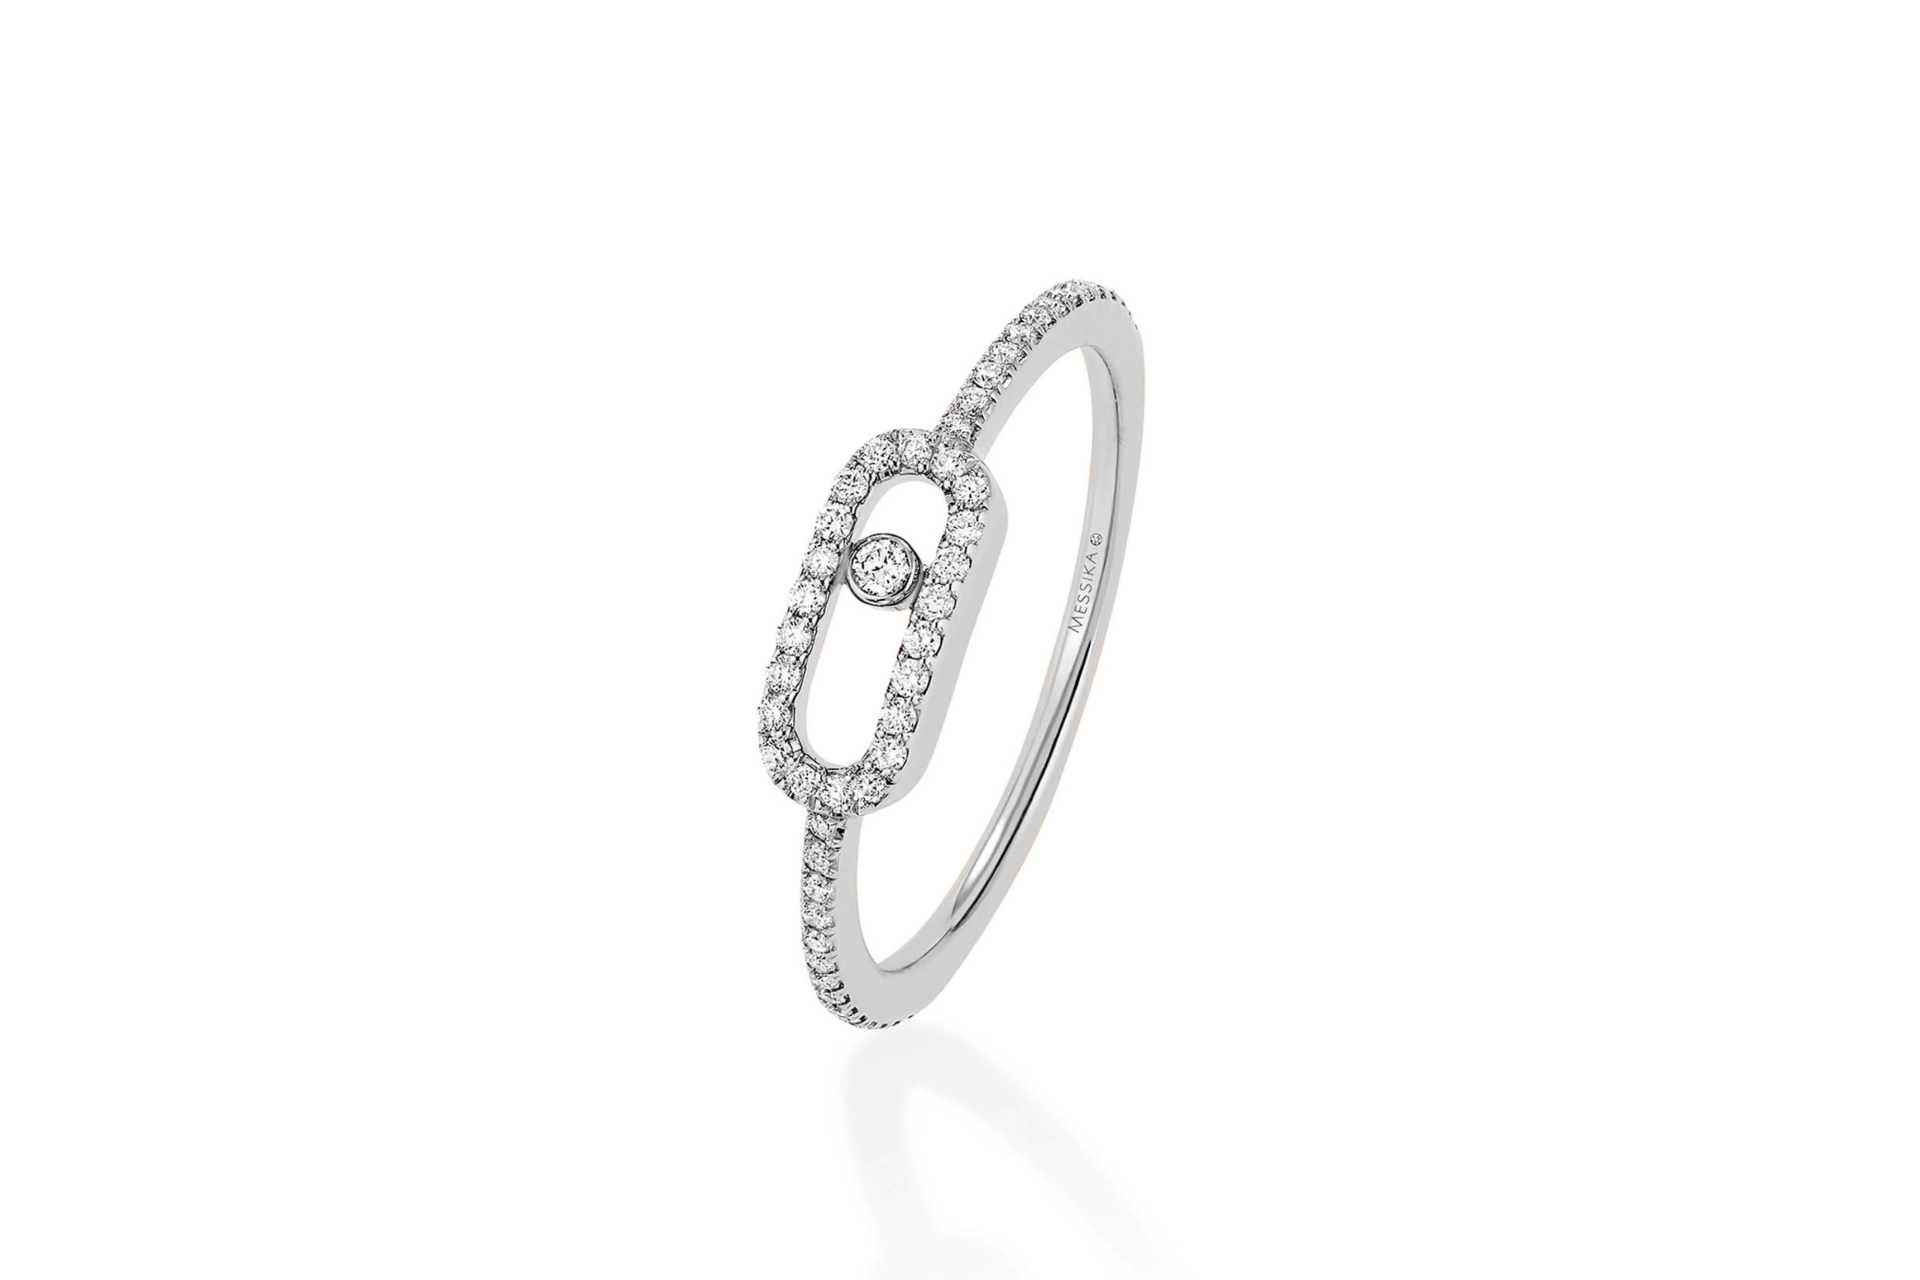 jennifer-kathe-schmuckfavoriten-luxury-jewelry-juwelier-brillantschmuck-diamanten6